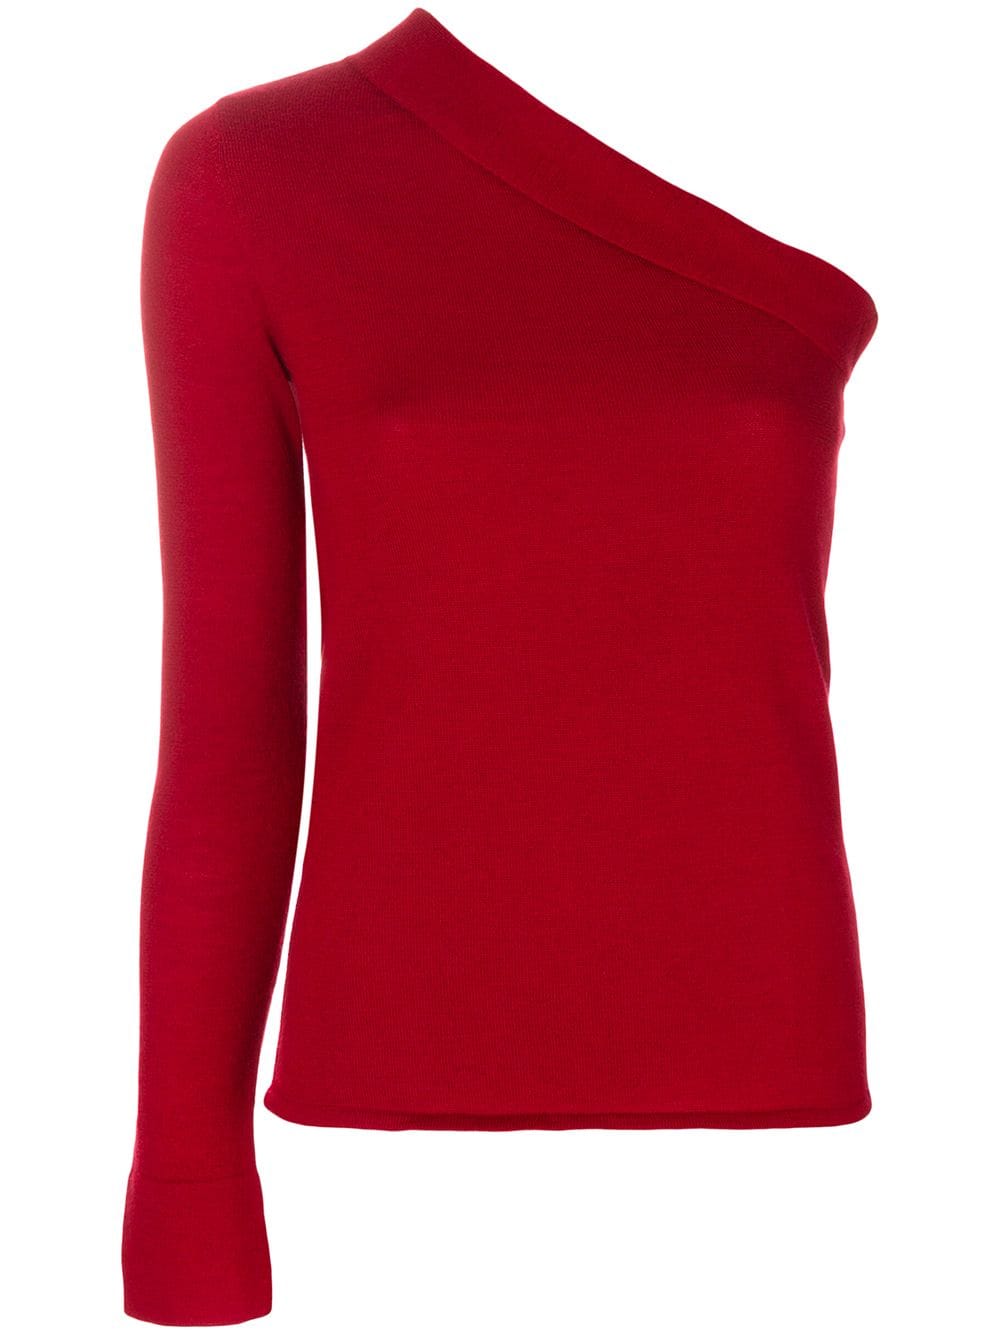 Cashmere In Love cashmere asymmetric top - Red von Cashmere In Love